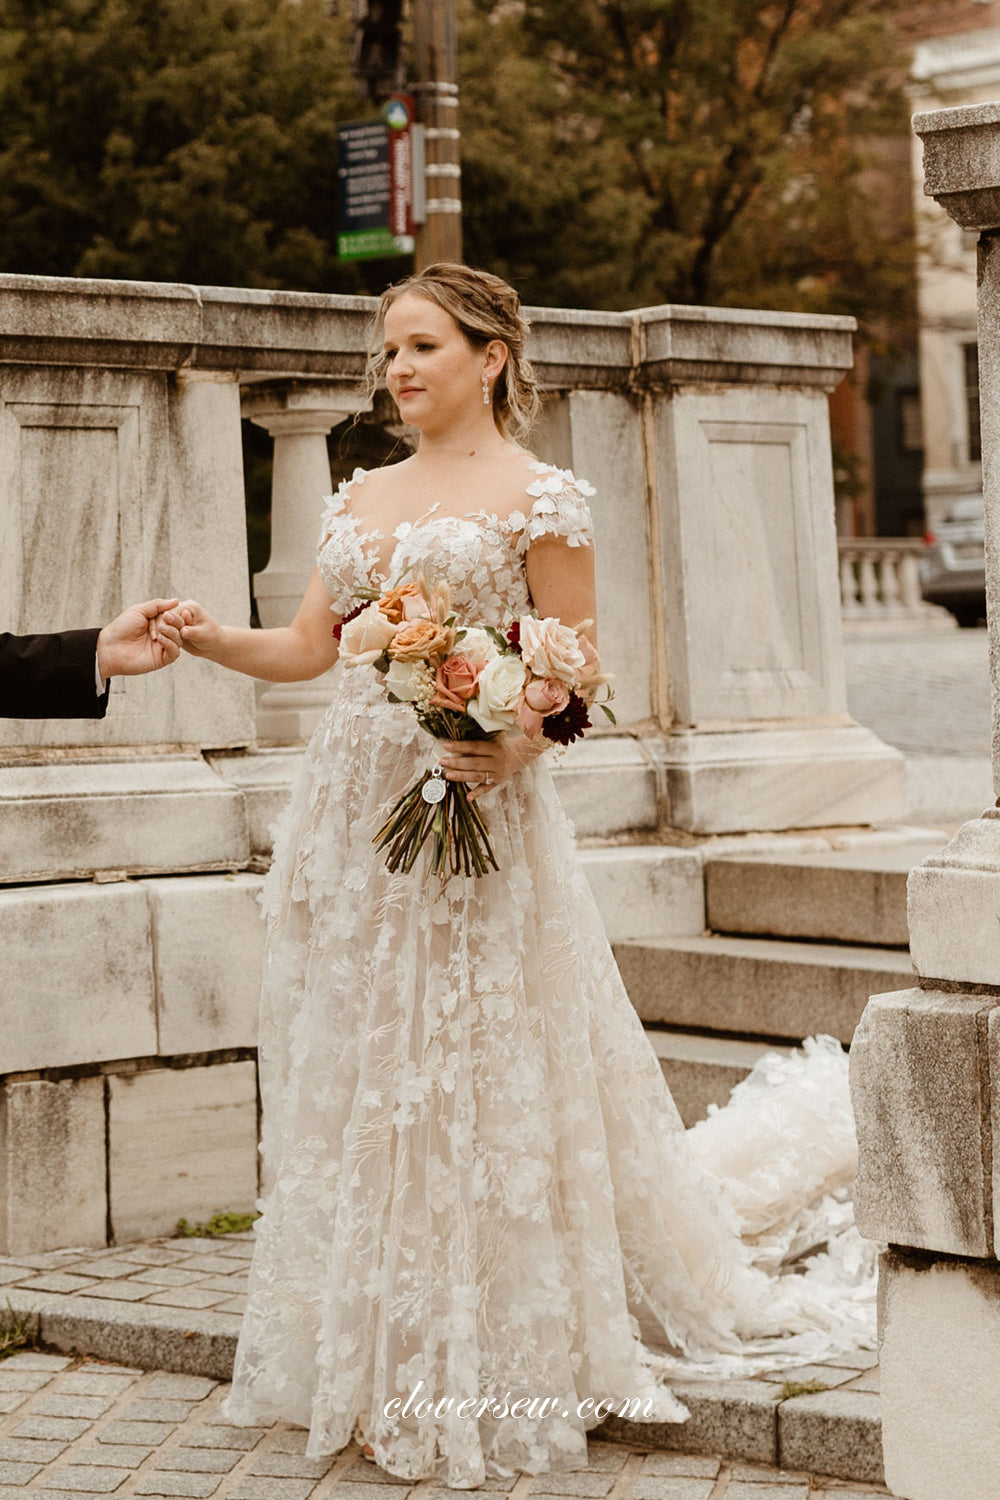 Ivory 3D Lace Cap Sleeves A-line Illusion Back Vintage Wedding Dresses, CW0361